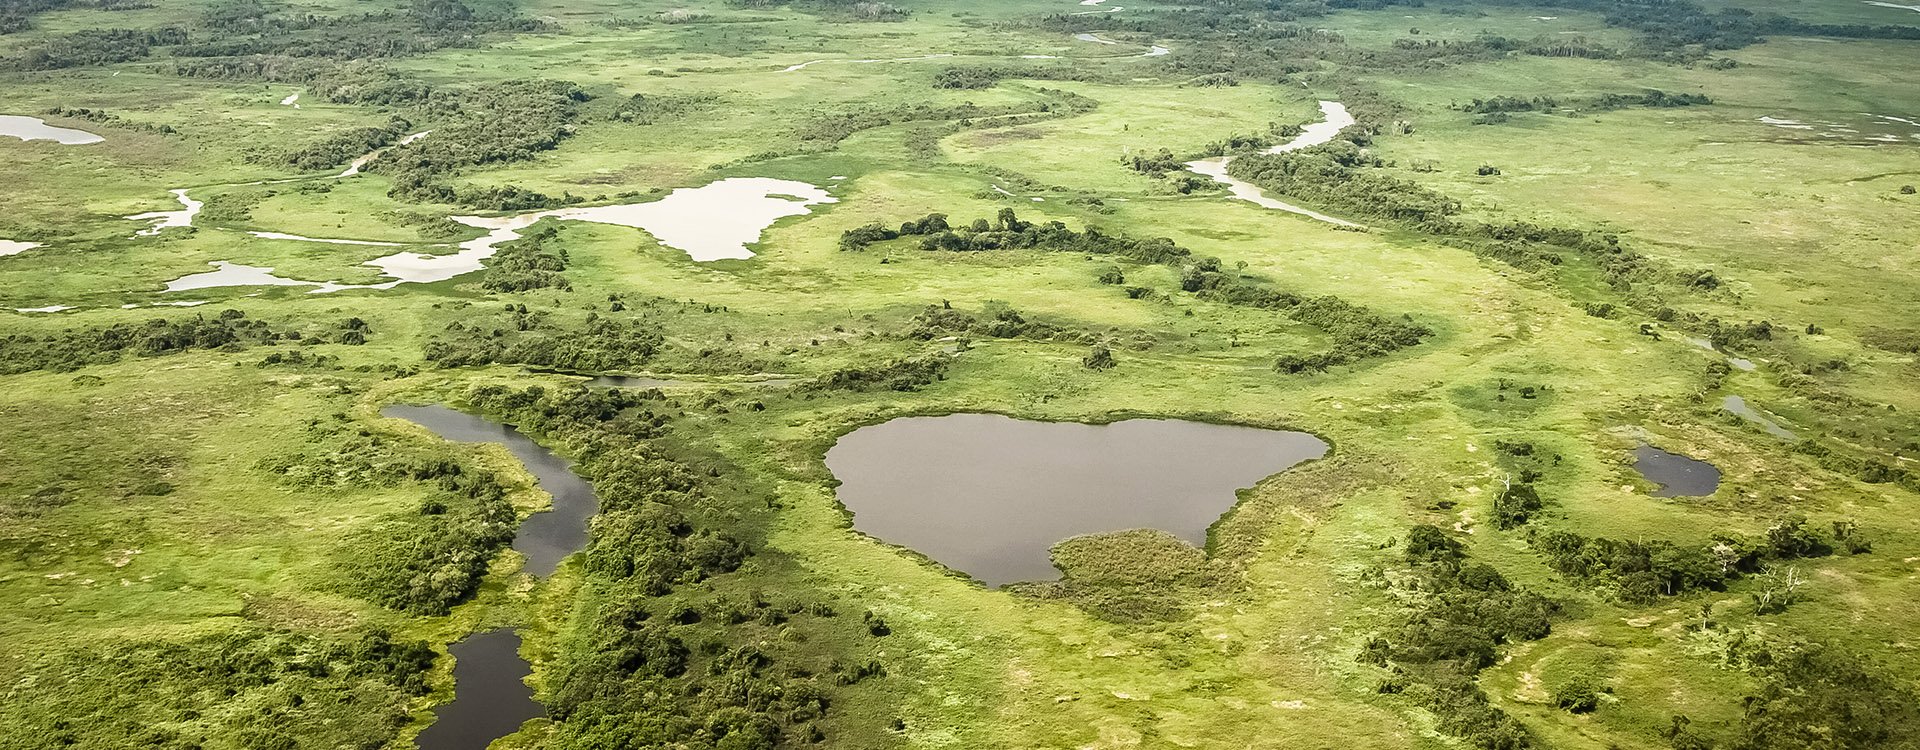 Aerial view of Pantanal wetlands, Pantanal, Brazil